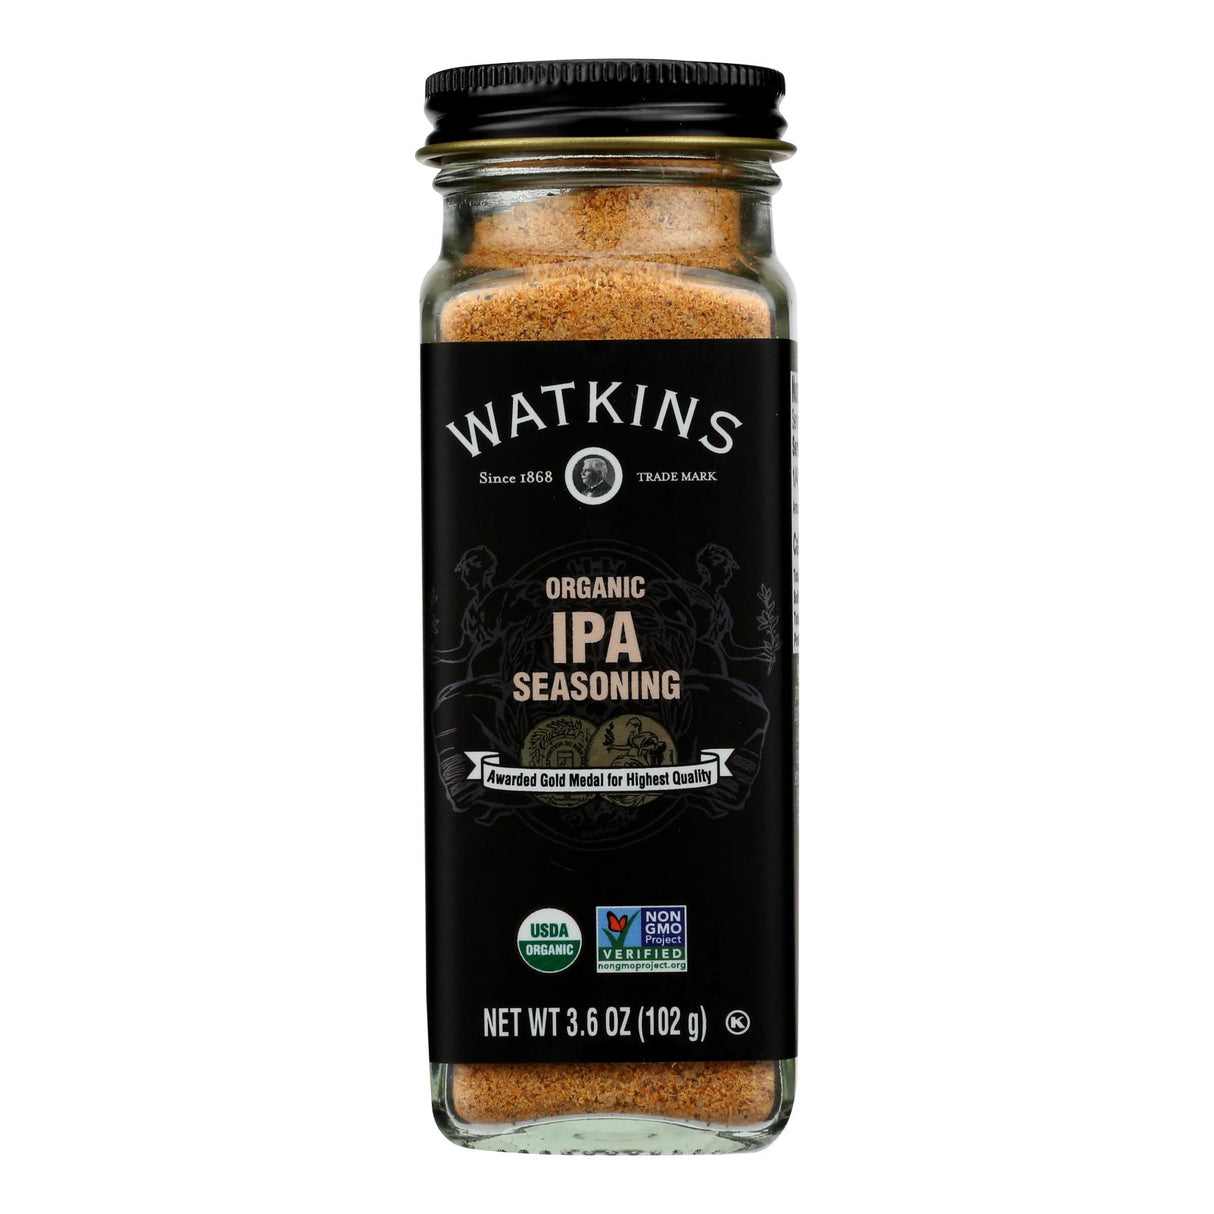 Watkins IPA Seasoning - 3.6 Oz. Bulk Case of 3 - Cozy Farm 